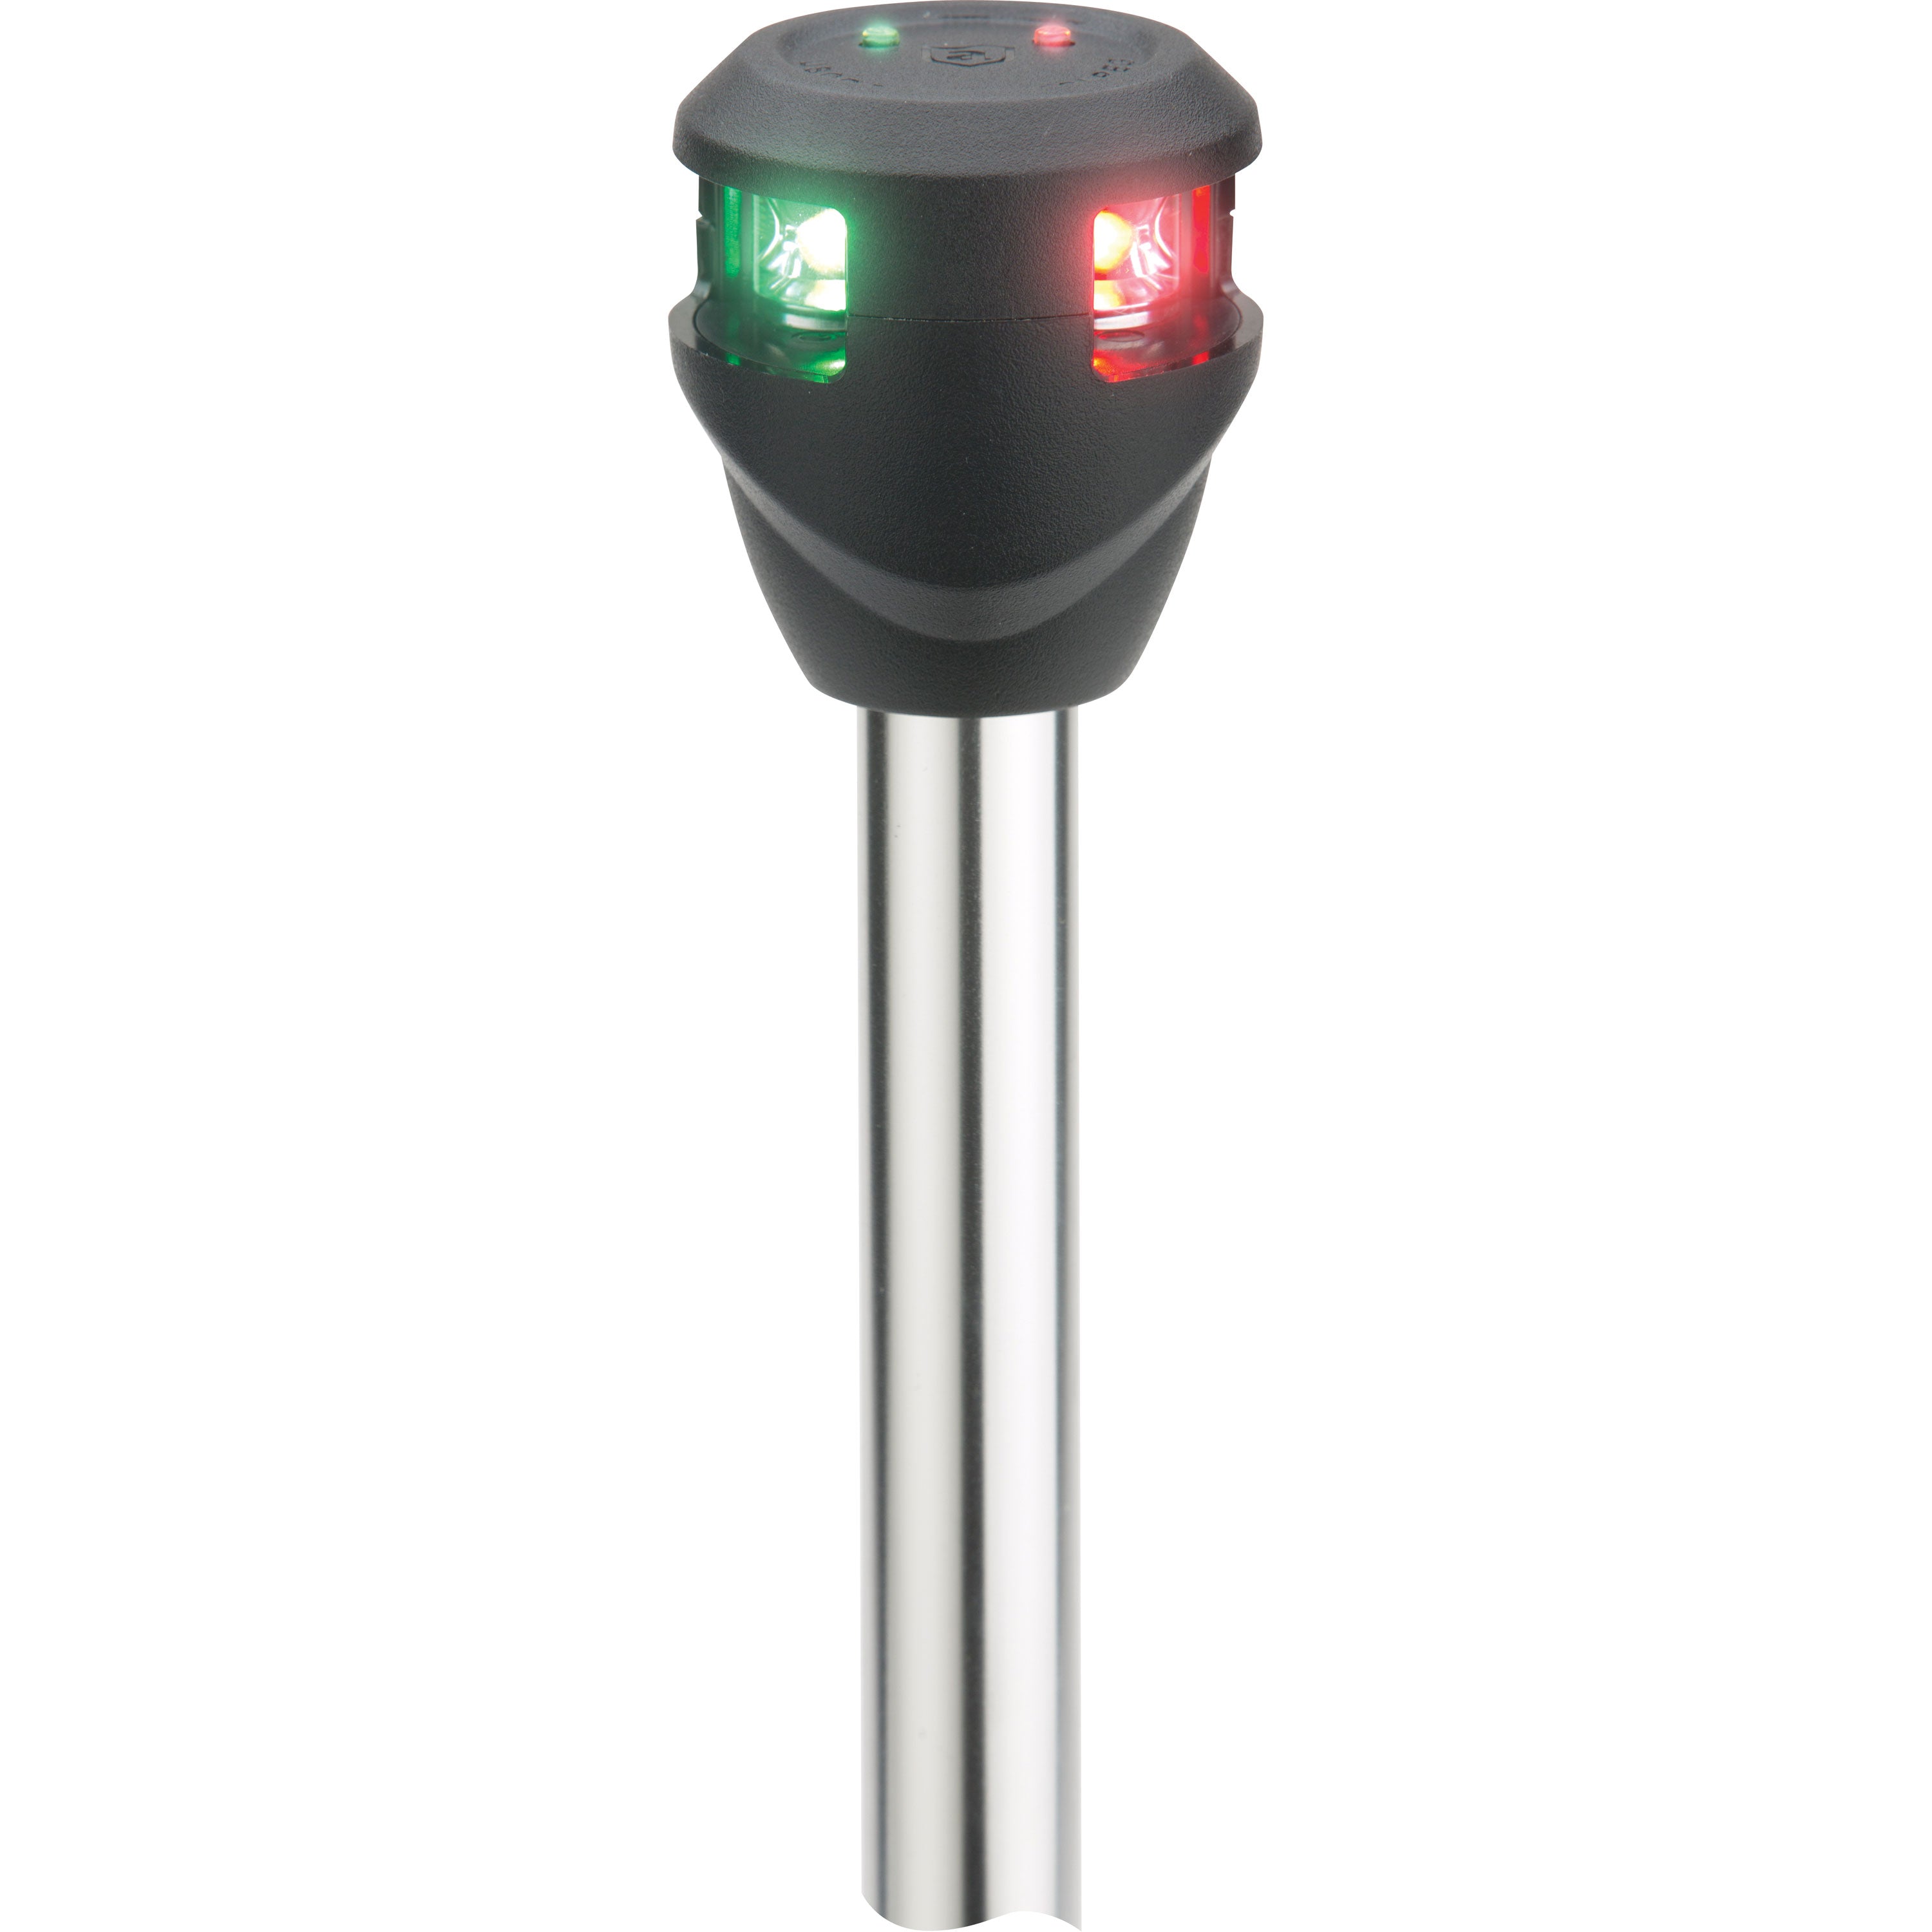 Attwood NV6LC1-10A7 LED Light Pole - Bi-Color 10", Angled